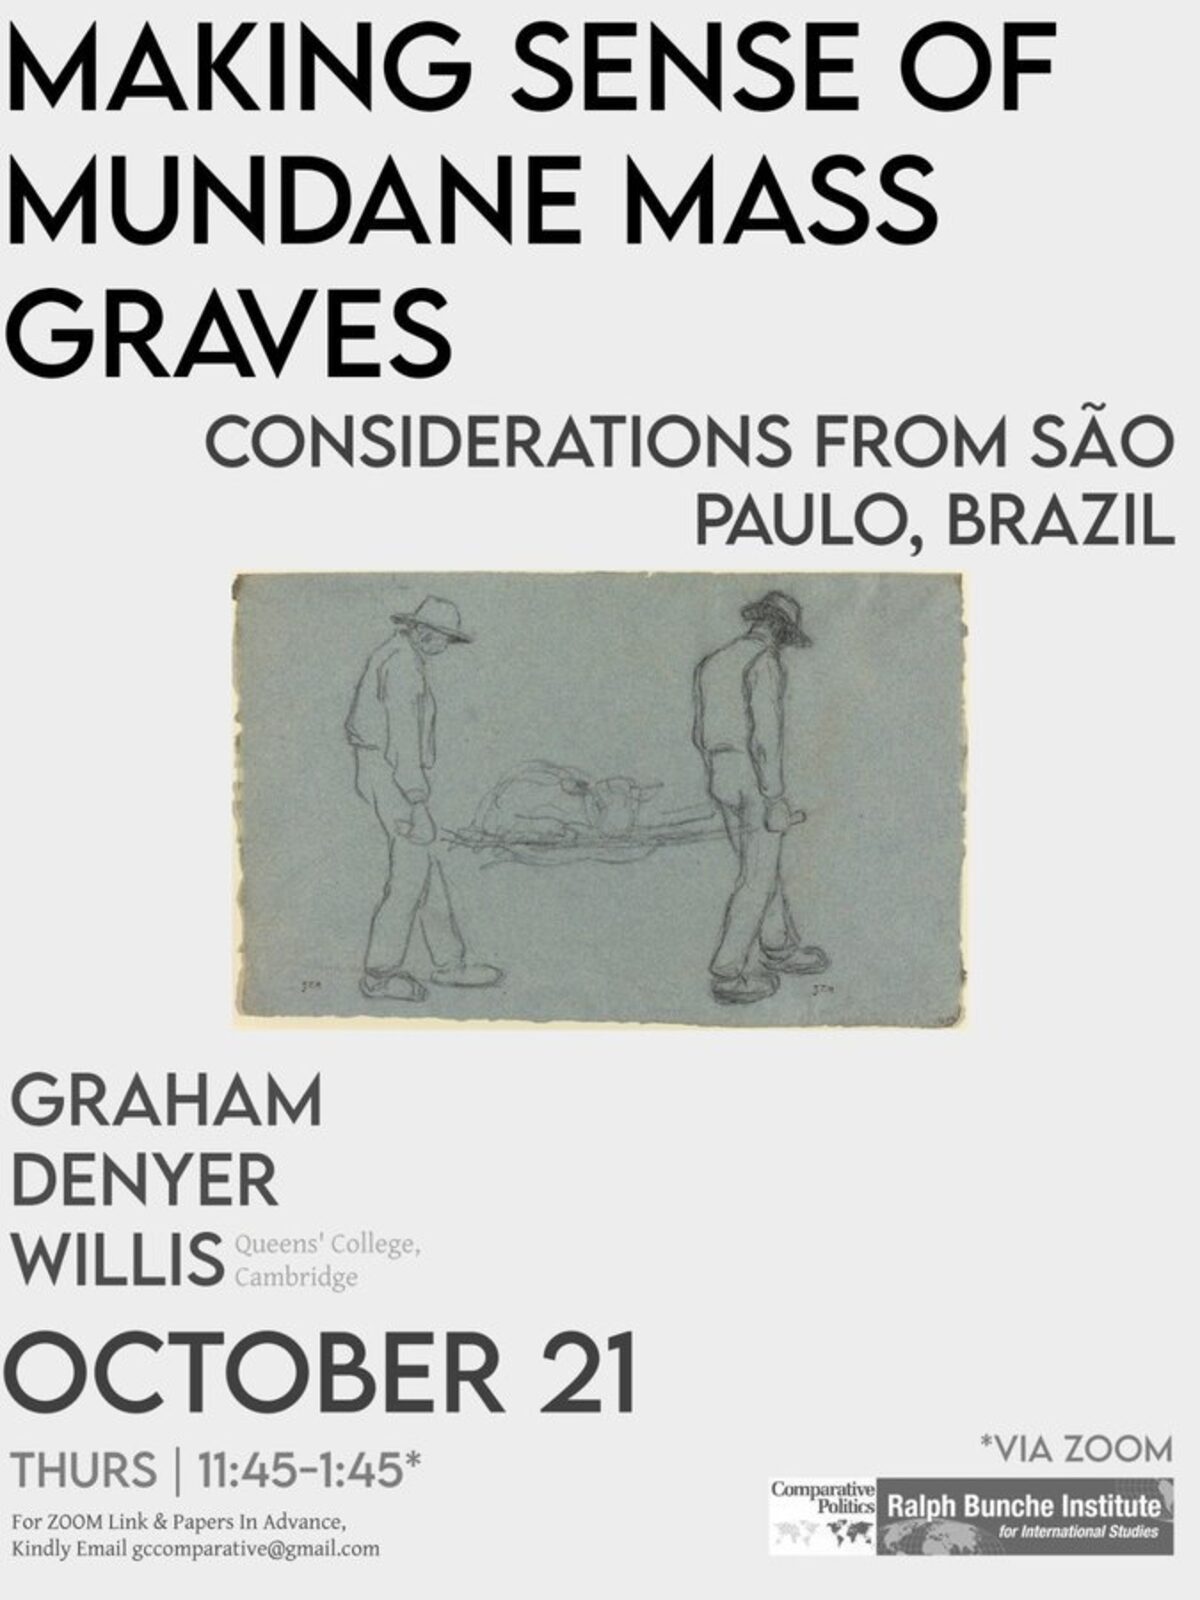 Comparative Politics Workshop: Graham Denyer Willis, "Making Sense of Mundane Mass Graves. Considerations from Sao Paulo, Brazil," Thursday, October 21, 11:45am–1:45pm